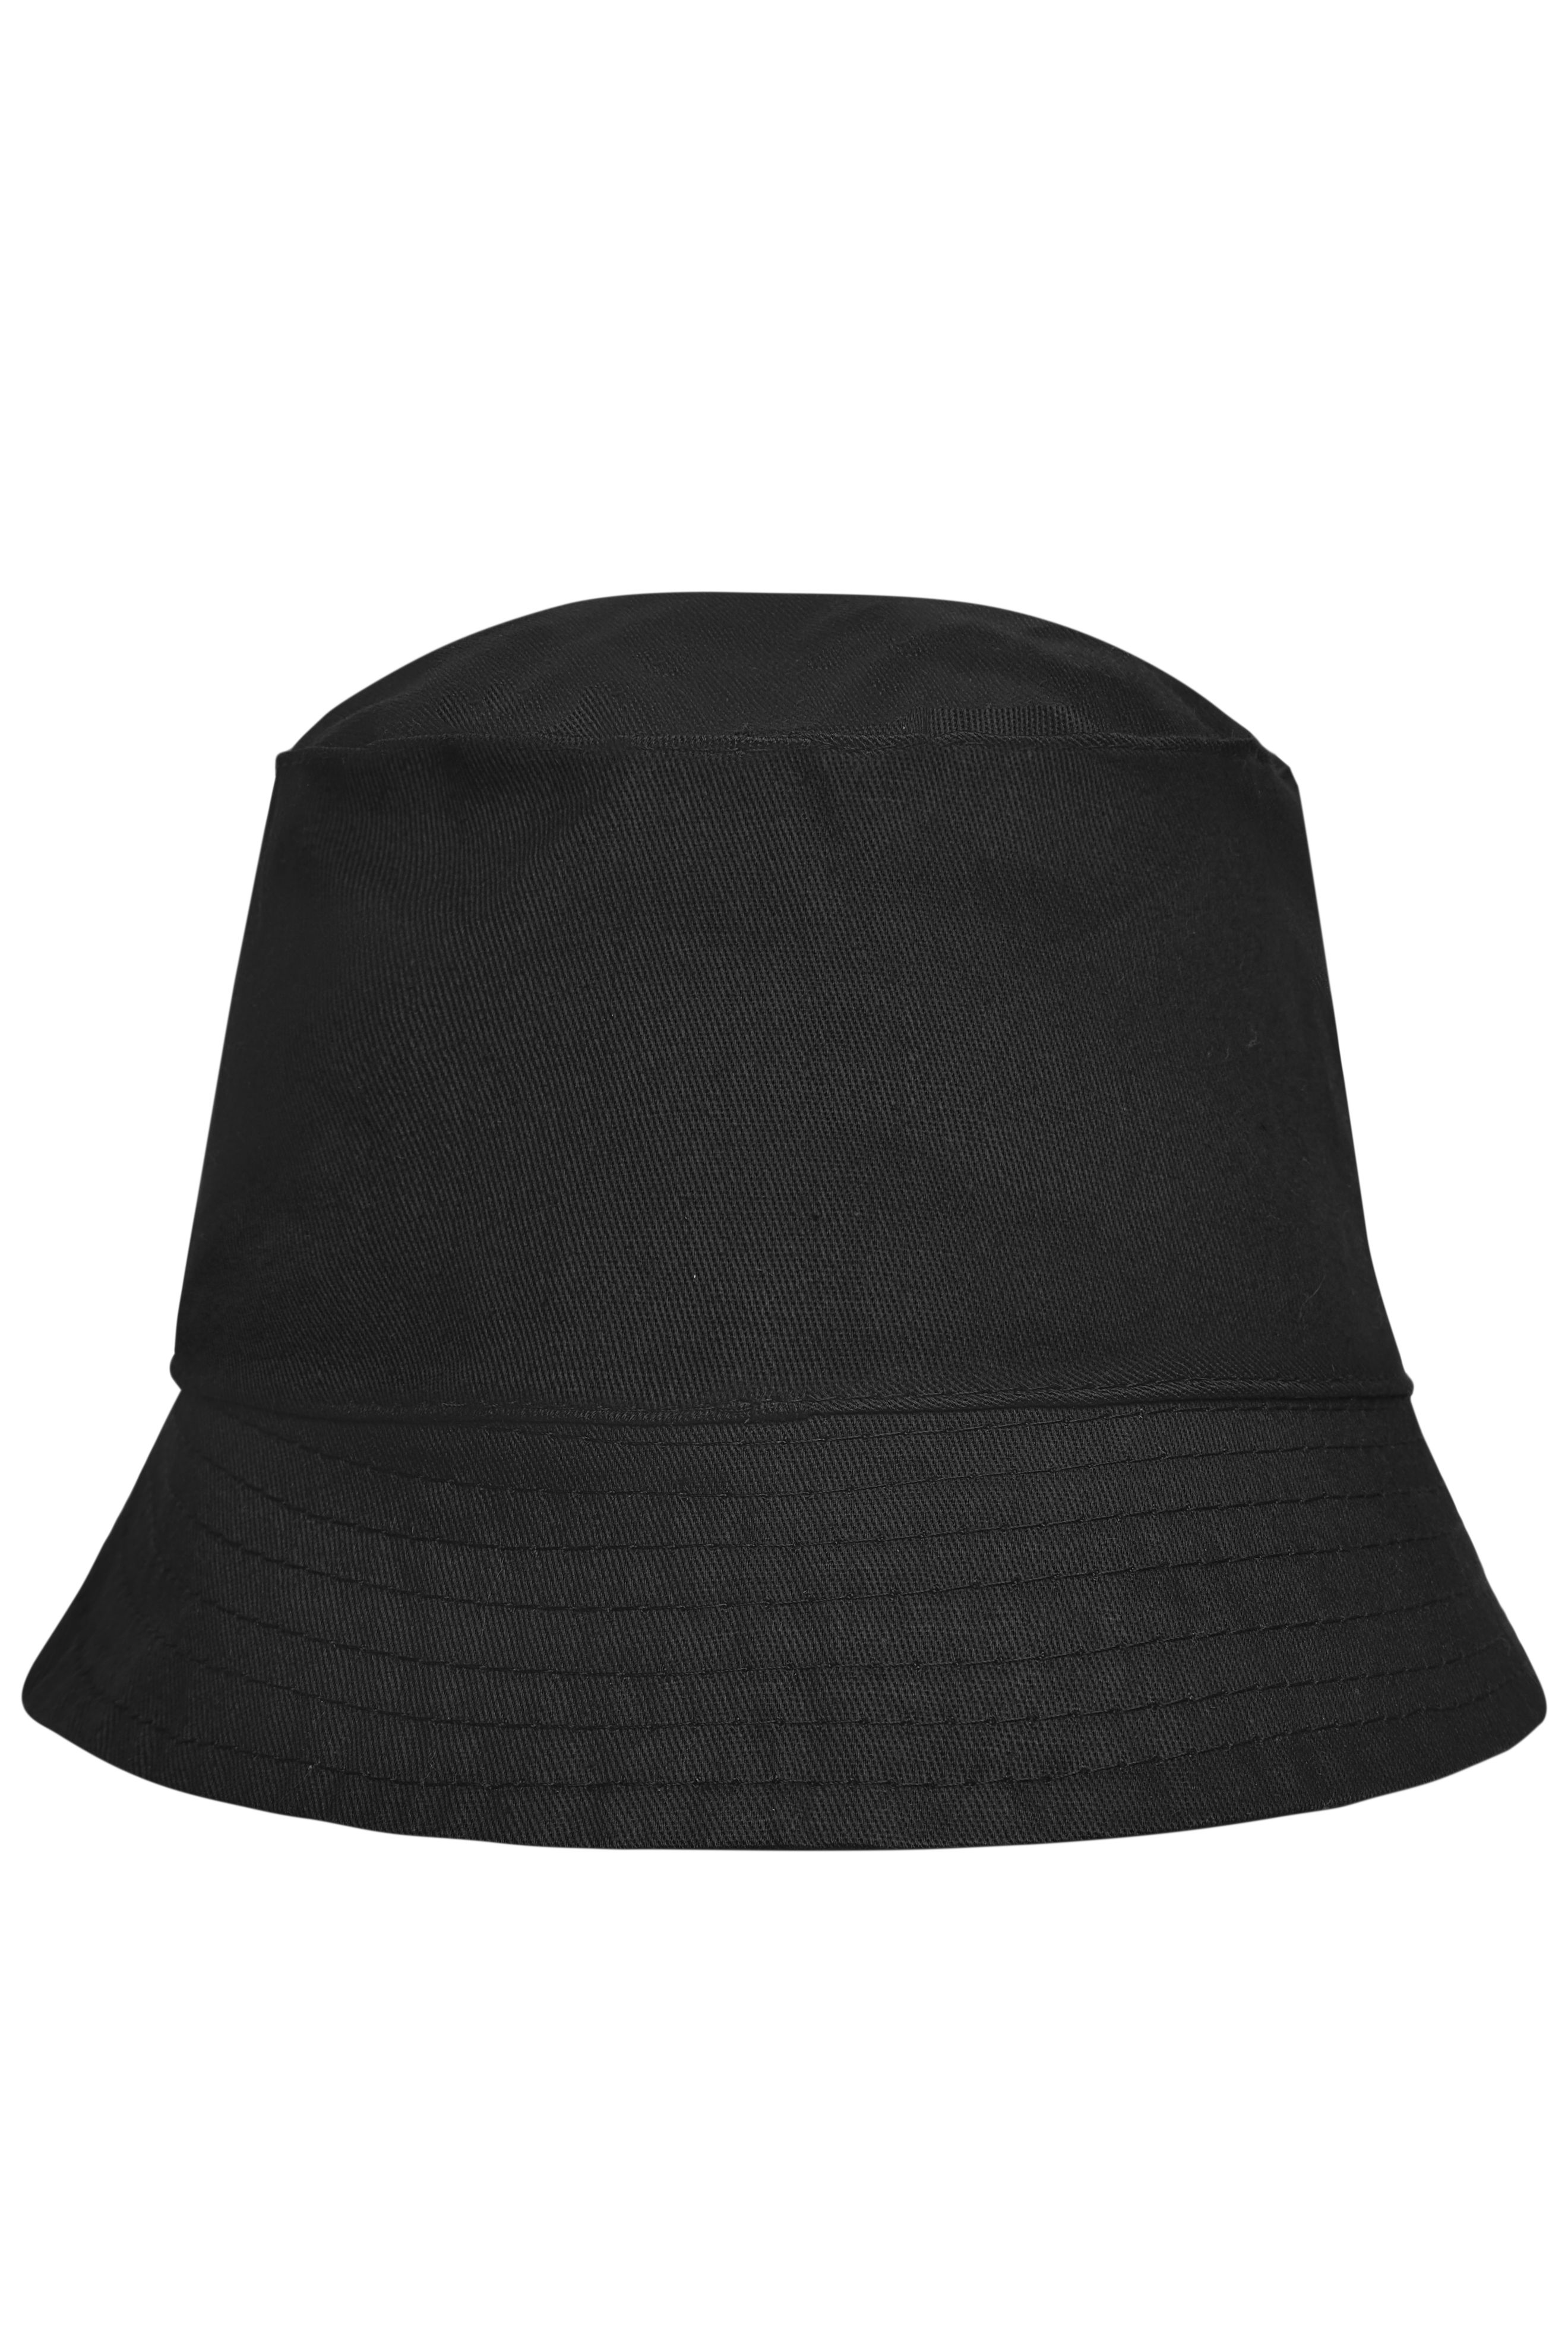 Bob Hat MB006 Einfacher Promo Hut